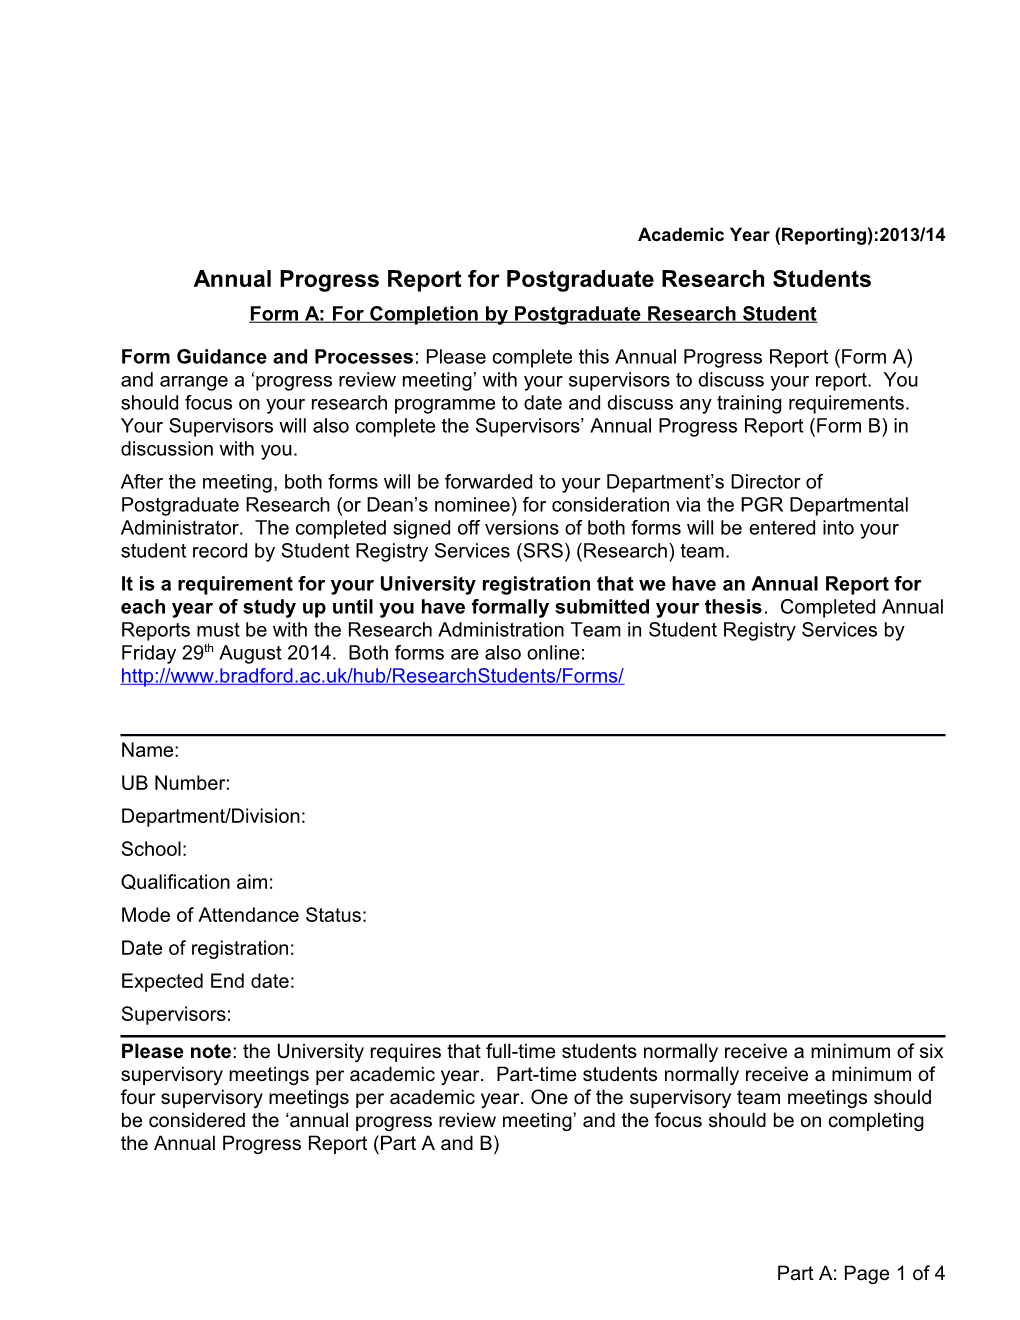 Annual Progress Report for Postgraduateresearch Students